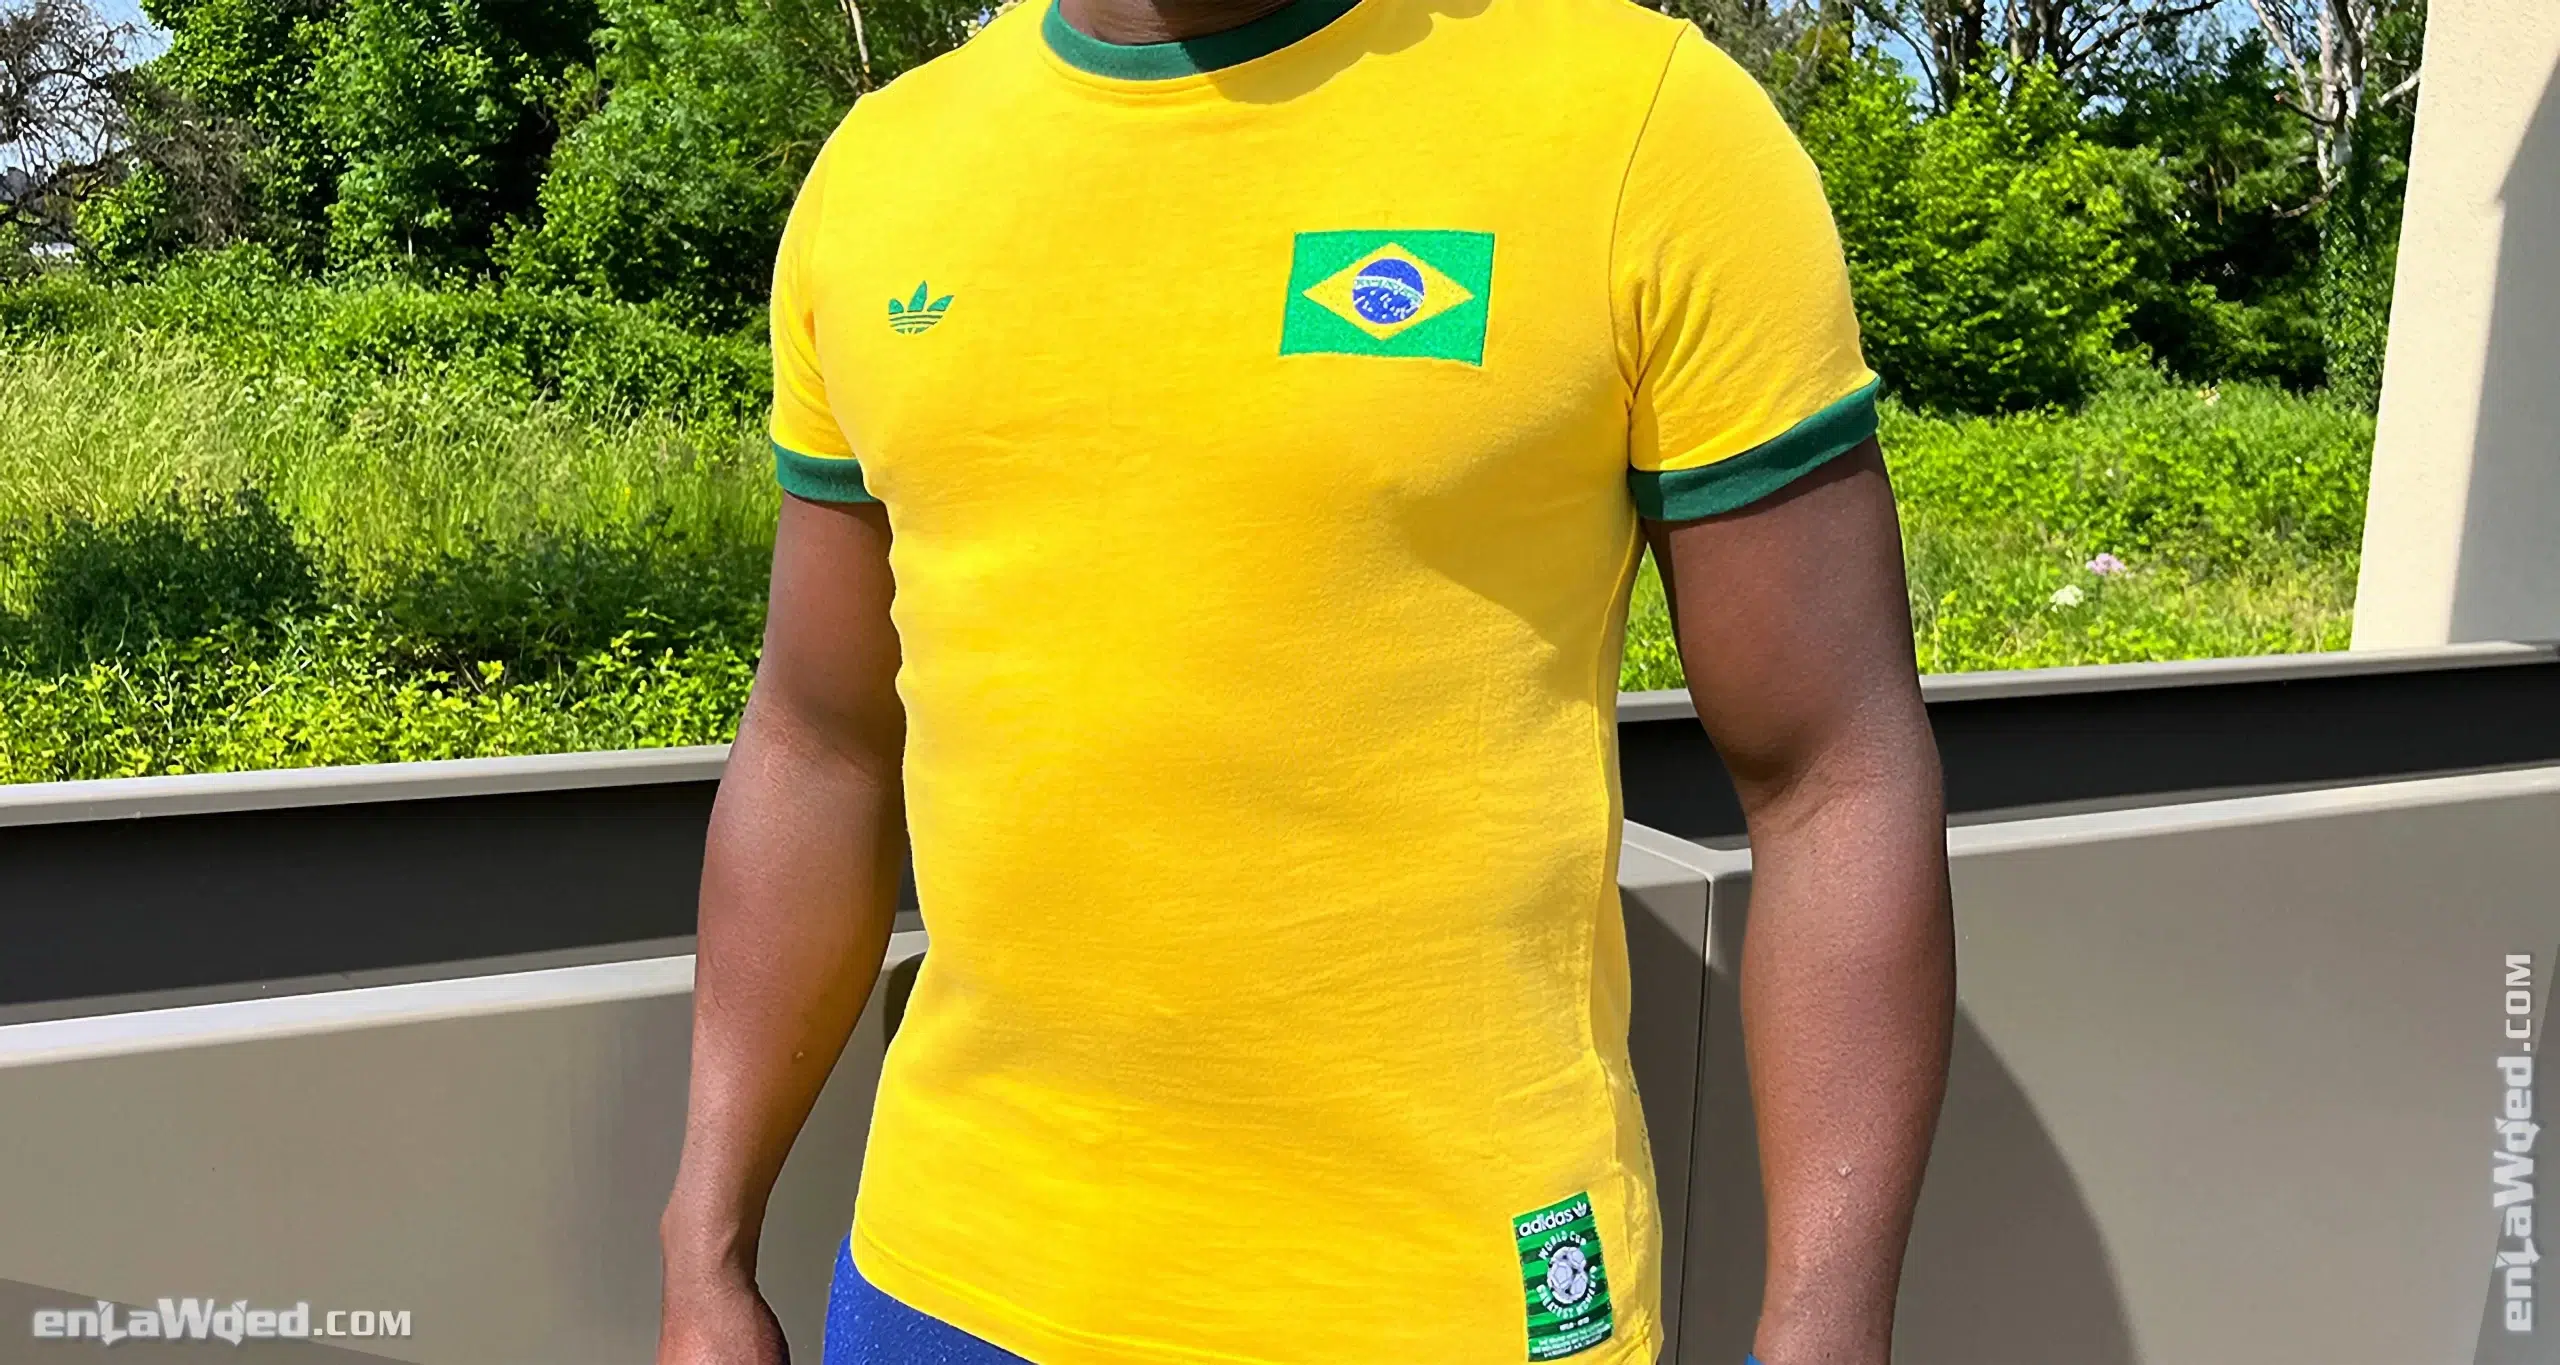 Men’s 2006 Brasil ’70 T-Shirt by Adidas Originals: Memorable (EnLawded.com file #lmchk90222ip2y123503kg9st)